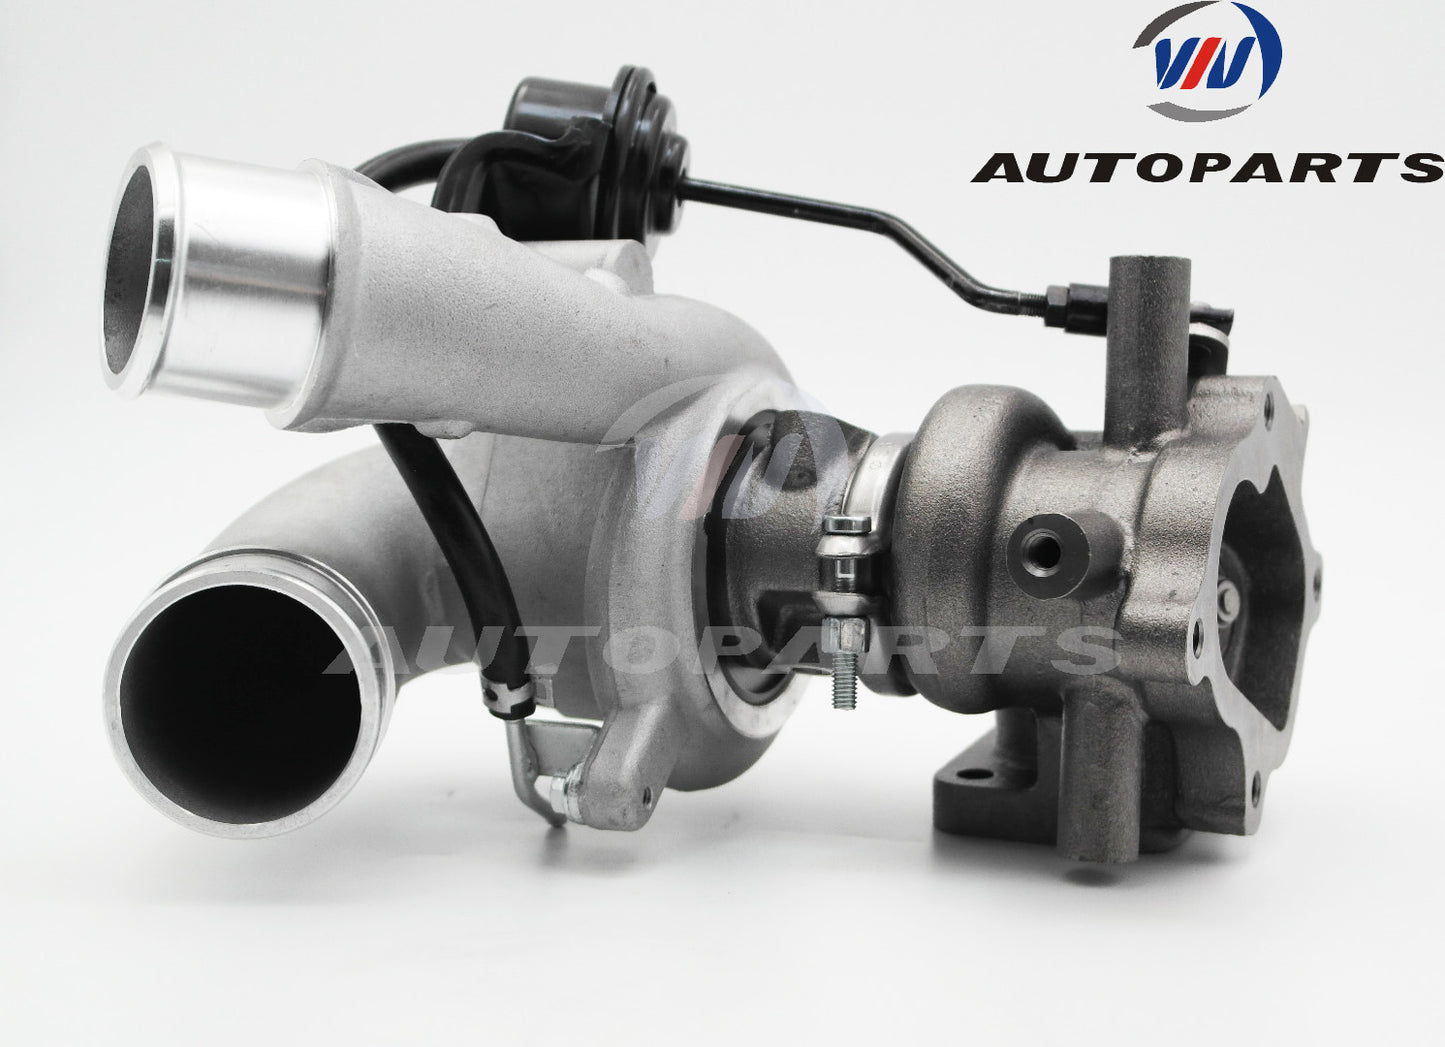 VIV AUTOPARTS Billet in Turbocharger 49590-45607 for Kia Bongo K2500 1.5L Diesel Engine